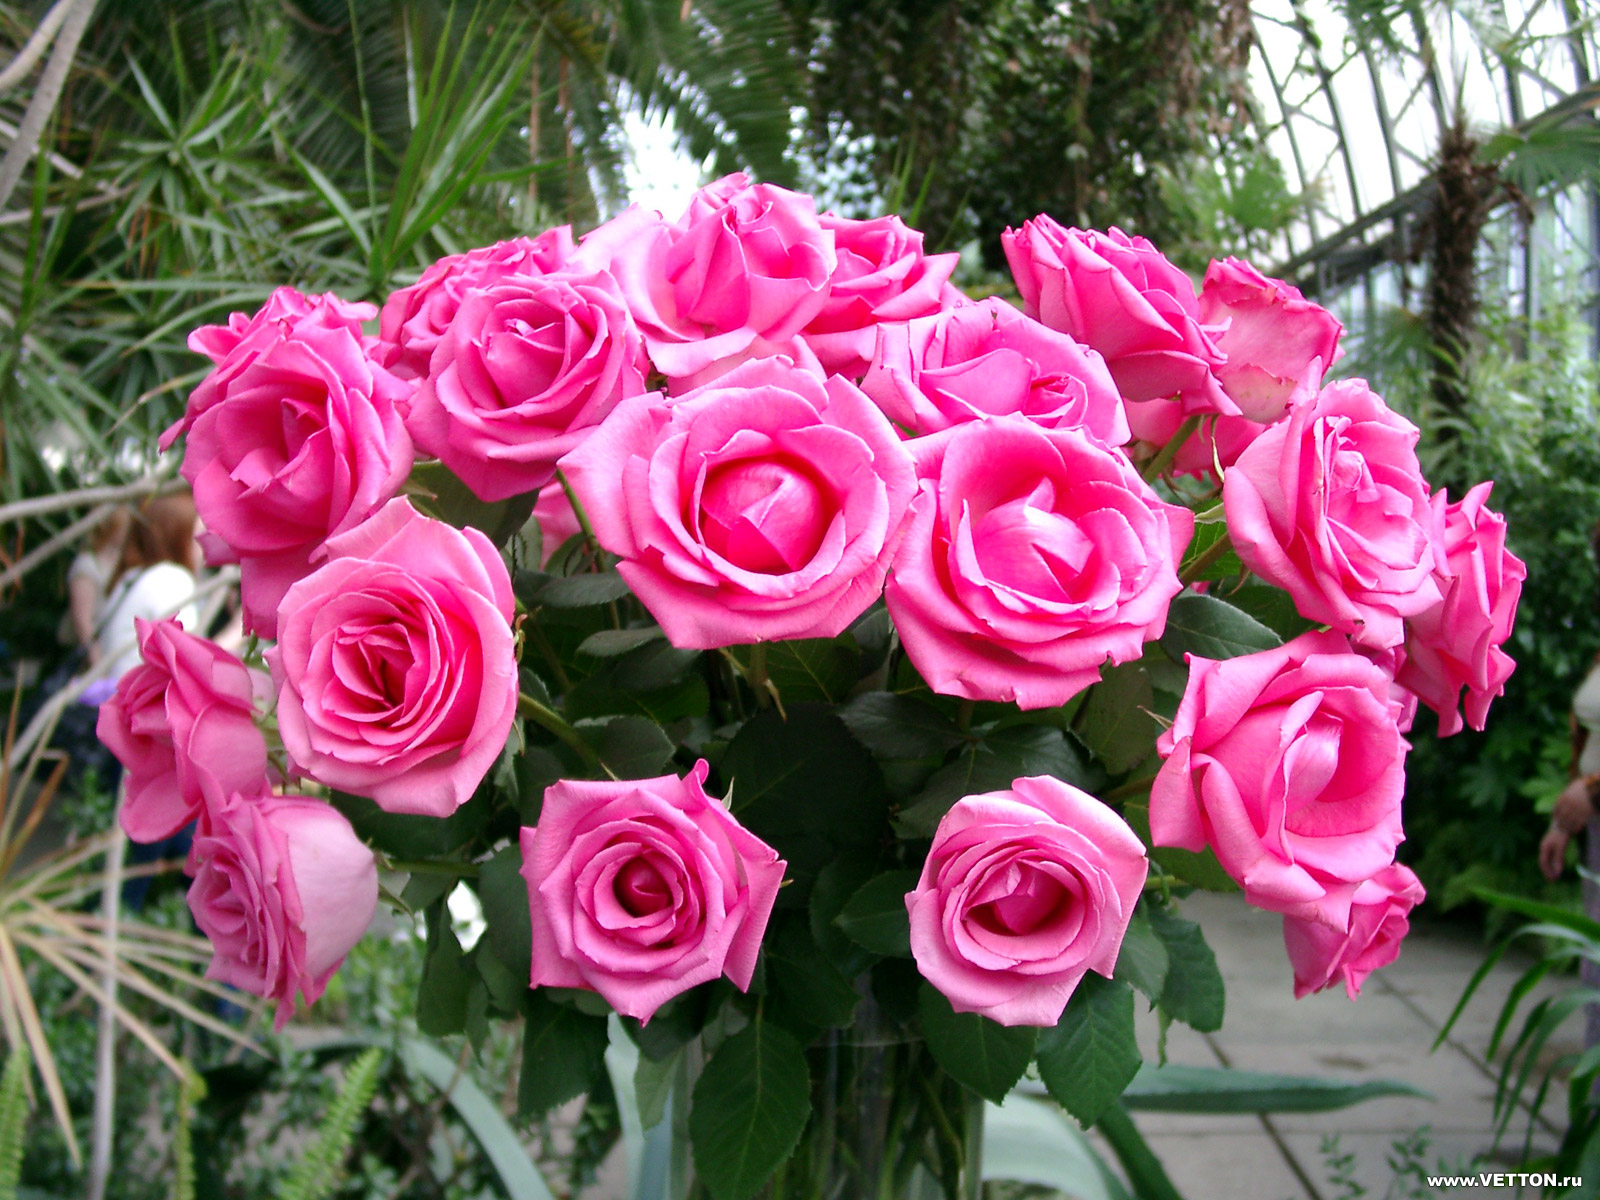 Fotos Rosen Blumen Rose Blüte